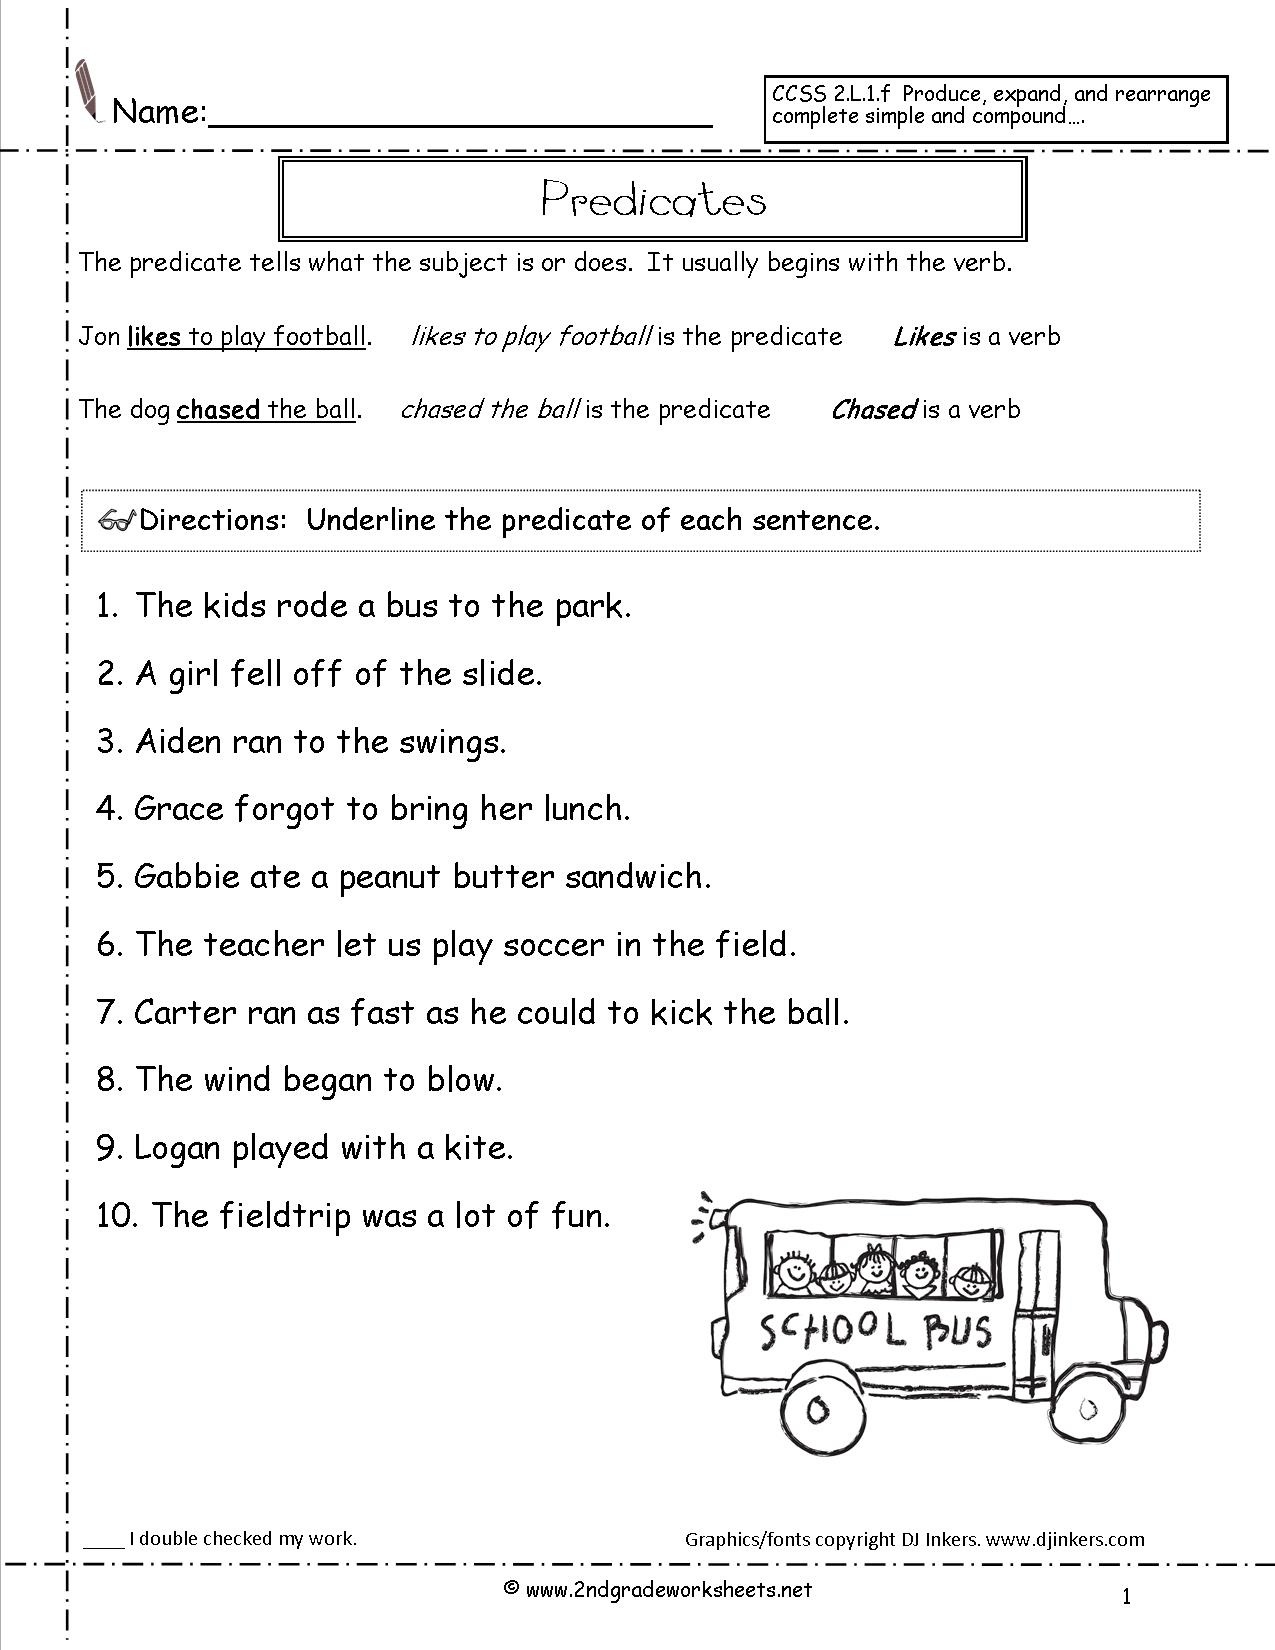 Second Grade Sentences Worksheets, Ccss 2.l.1.f Worksheets. - Free Printable Sentence Correction Worksheets